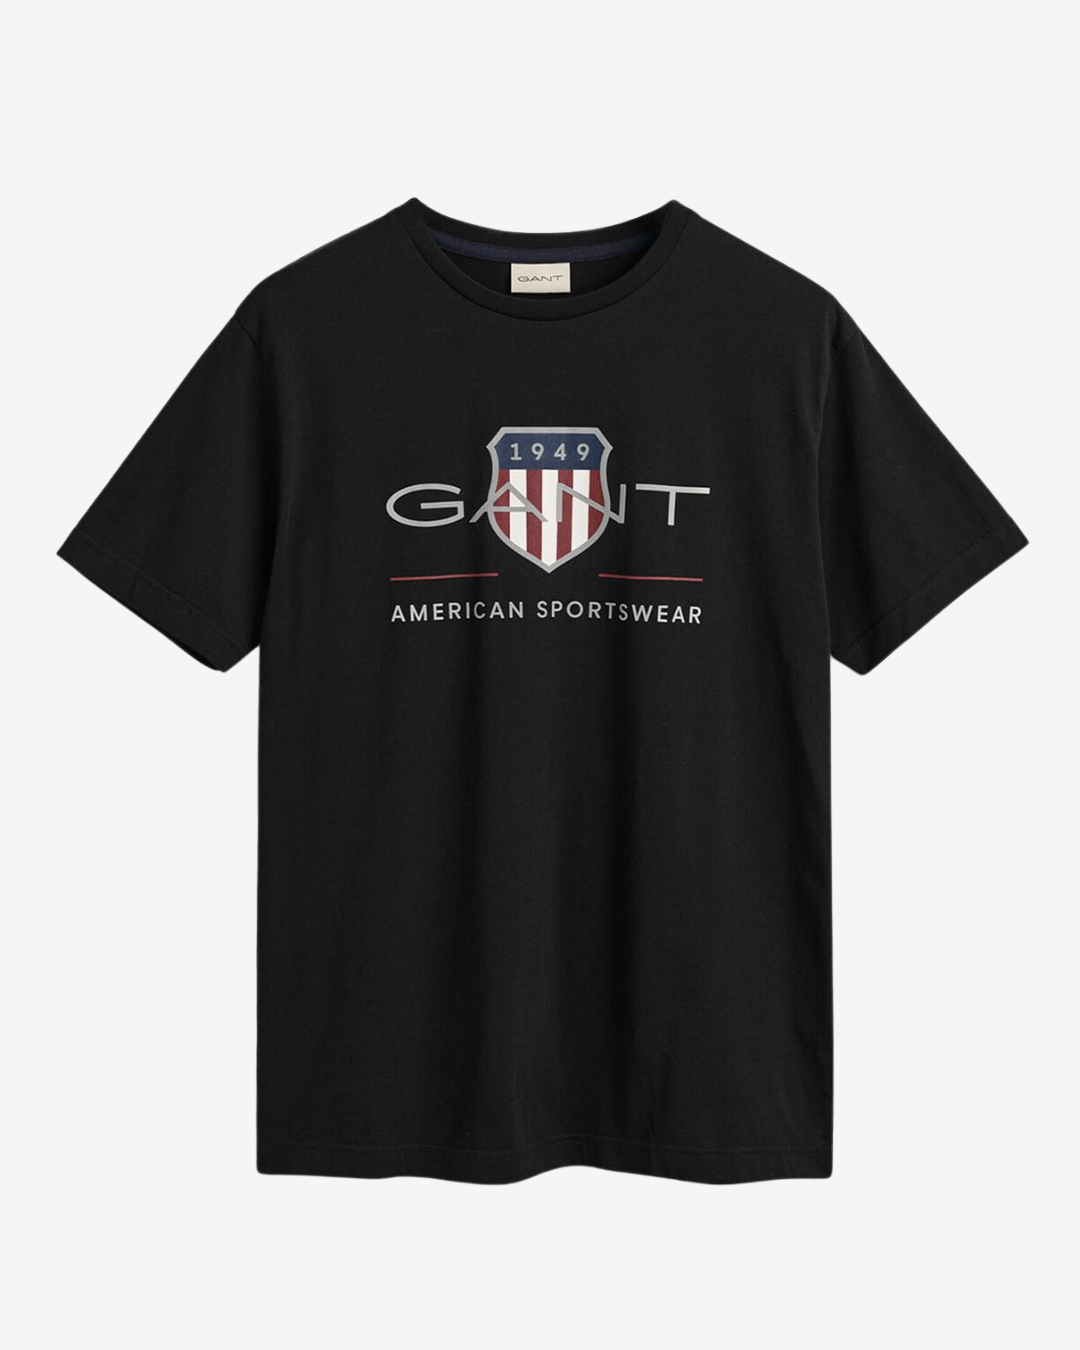 Se Gant Reg archive shield t-shirt - Sort - Str. L - Modish.dk hos Modish.dk